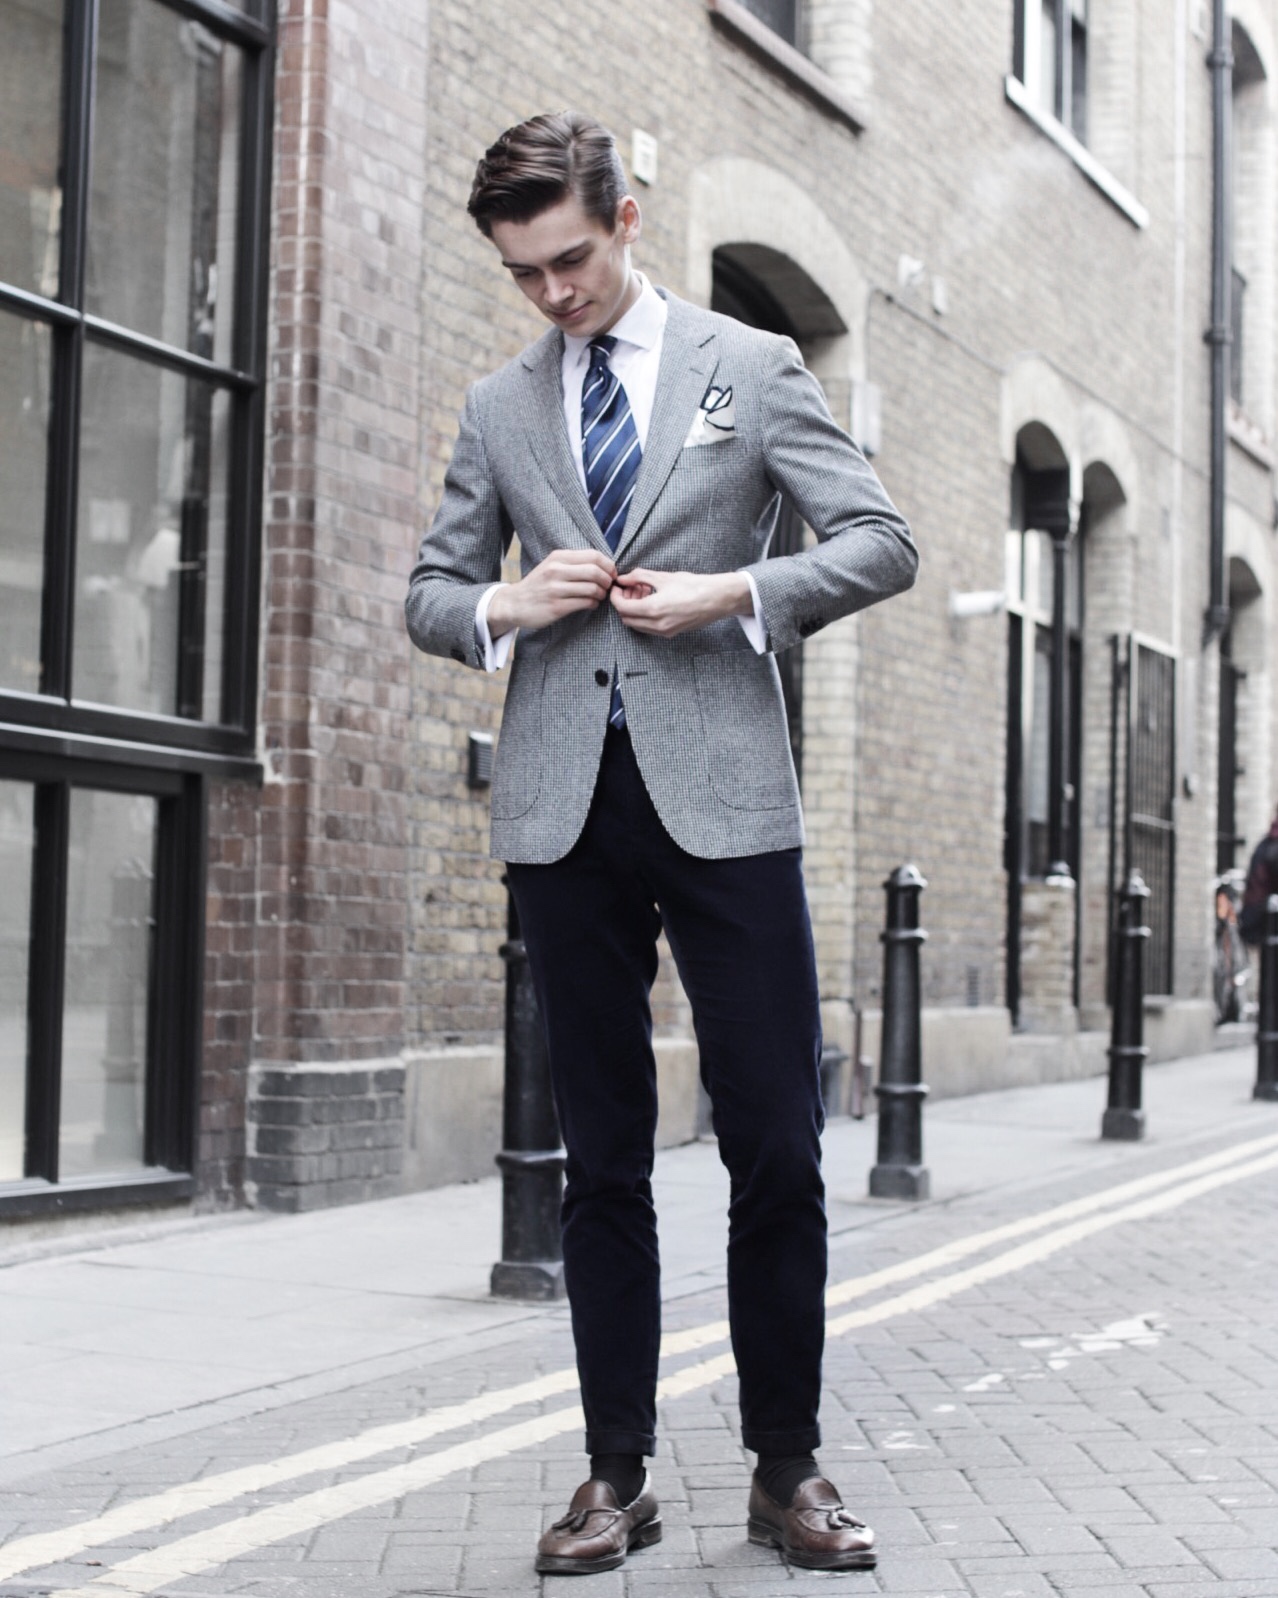 classic gentleman hair cut ruffians barber london dapper stylish suit tie loafers fashion